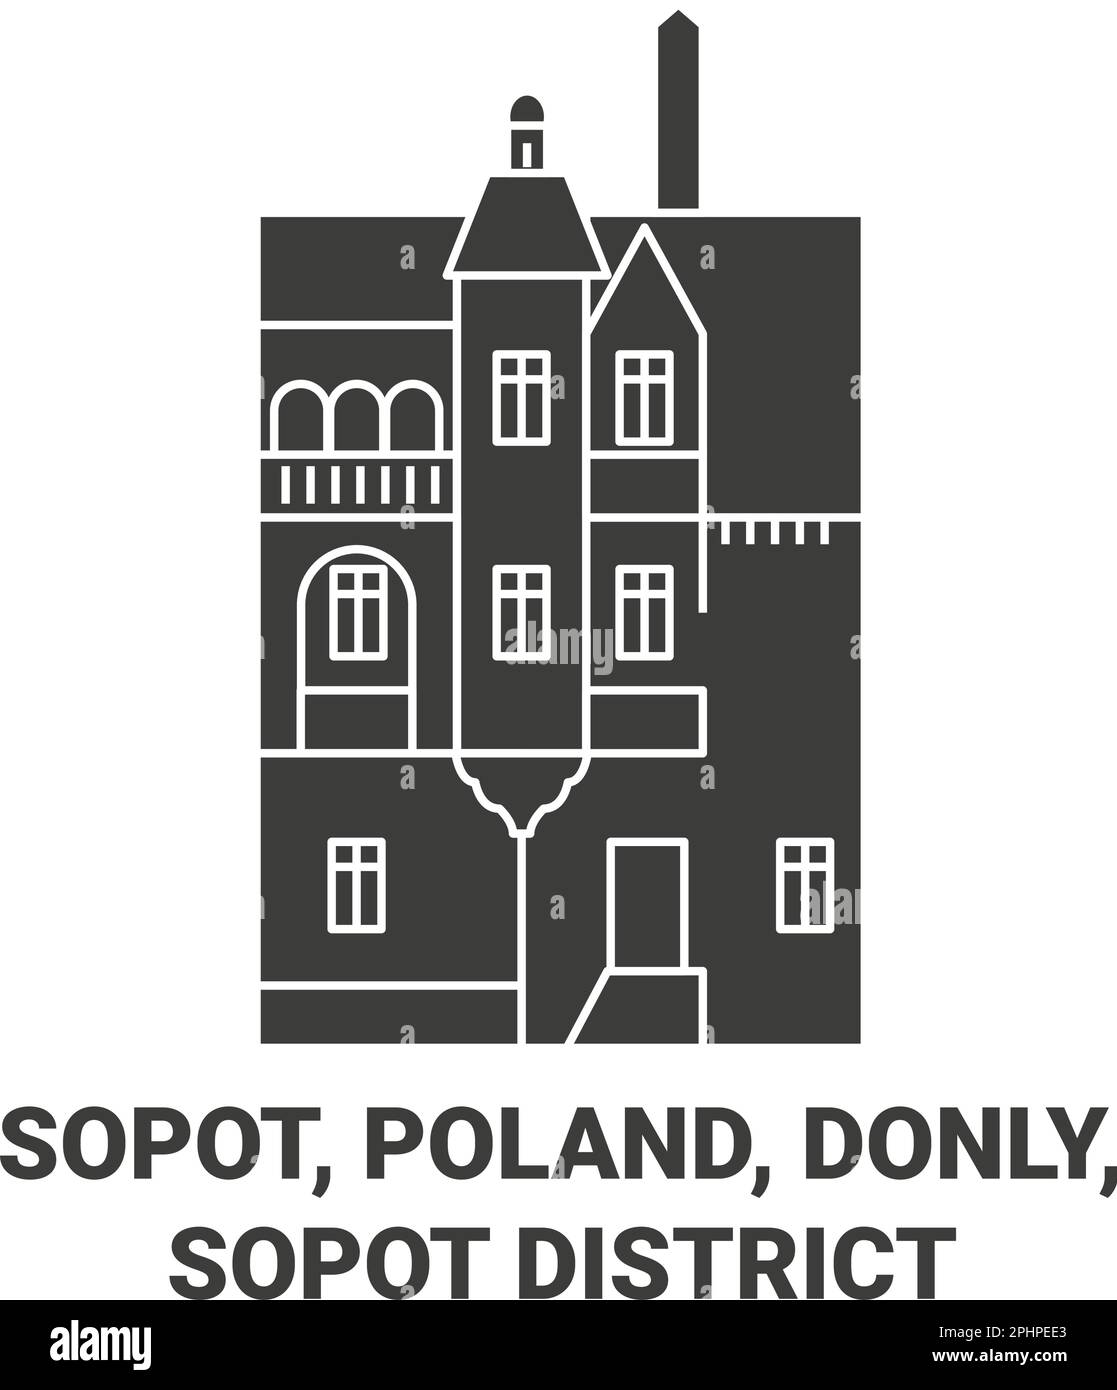 Poland, Sopot, Donly, Sopot District travel landmark vector illustration Stock Vector